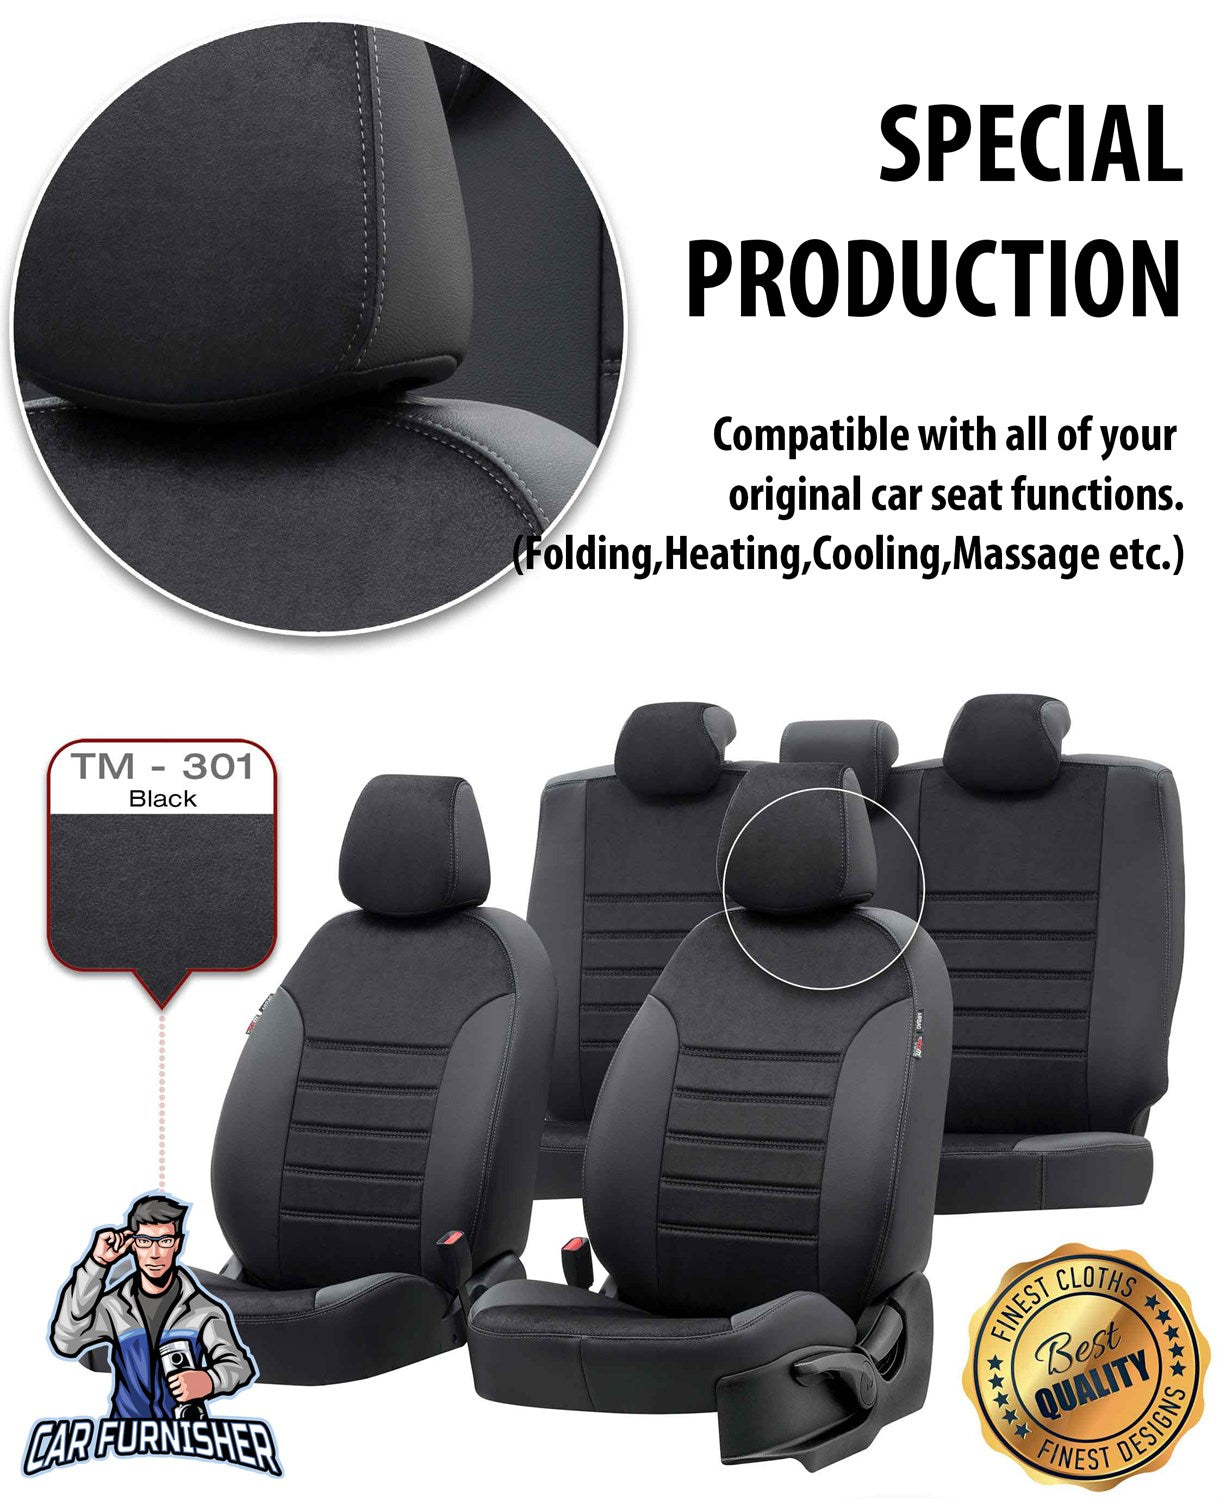 Dacia Sandero Seat Covers Milano Suede Design Smoked Black Leather & Suede Fabric